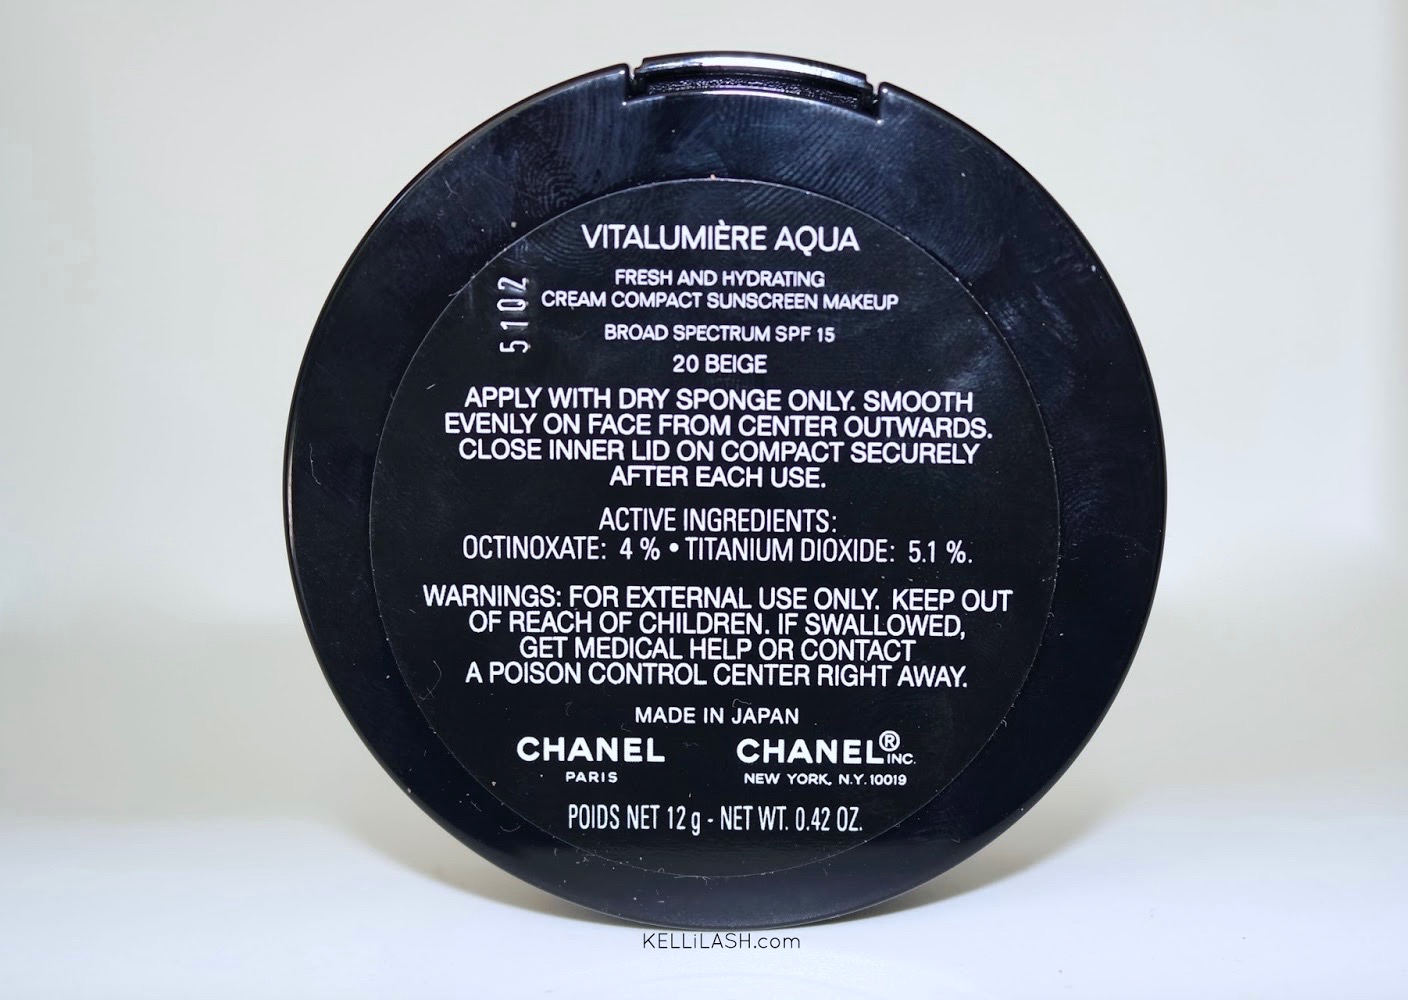 Review: Chanel Vitalumiere Aqua COMPACT Foundation